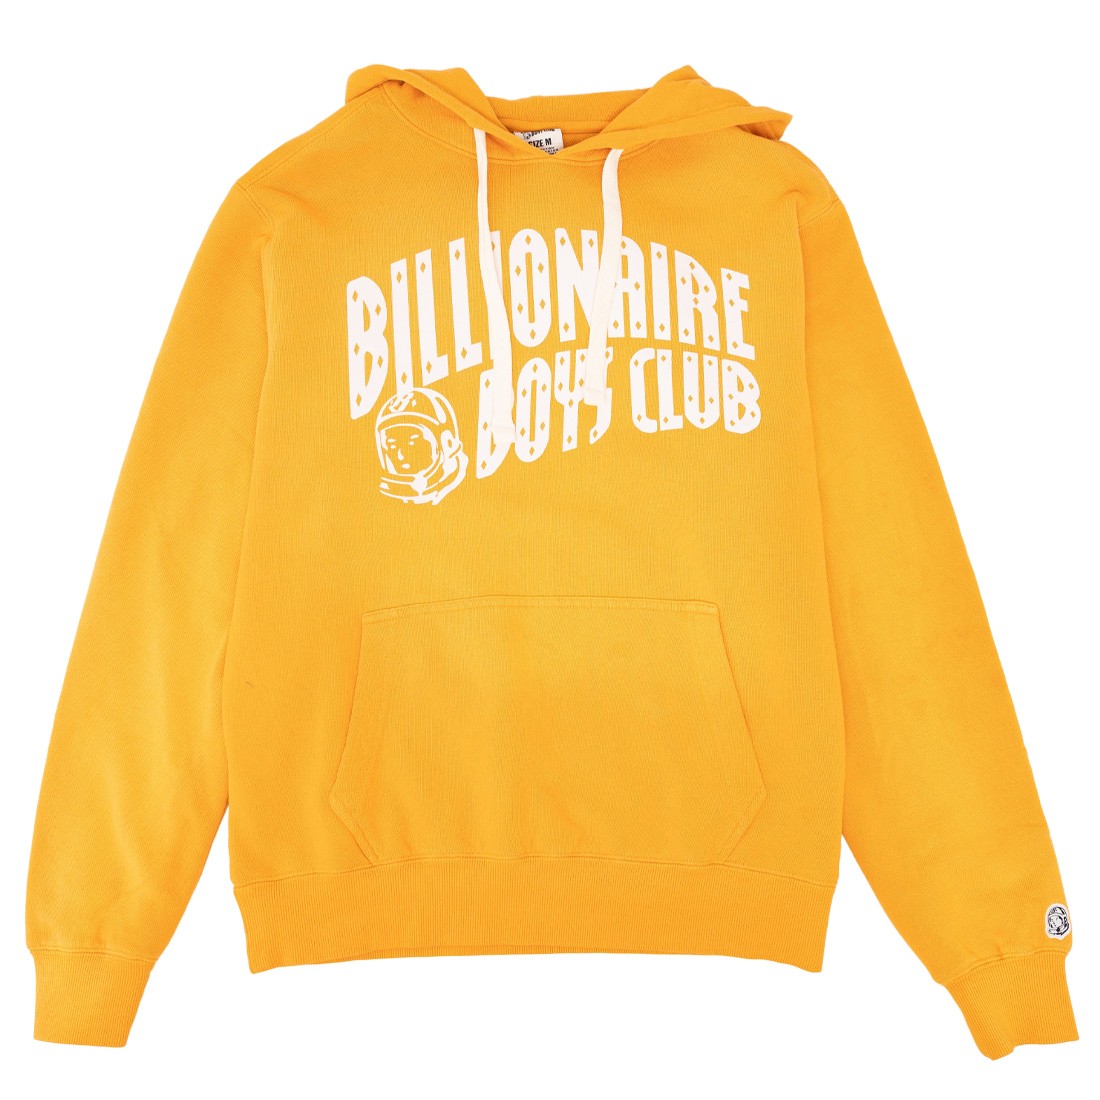 Billionaire Boys Club Men Vintage Arch Hoody (yellow)